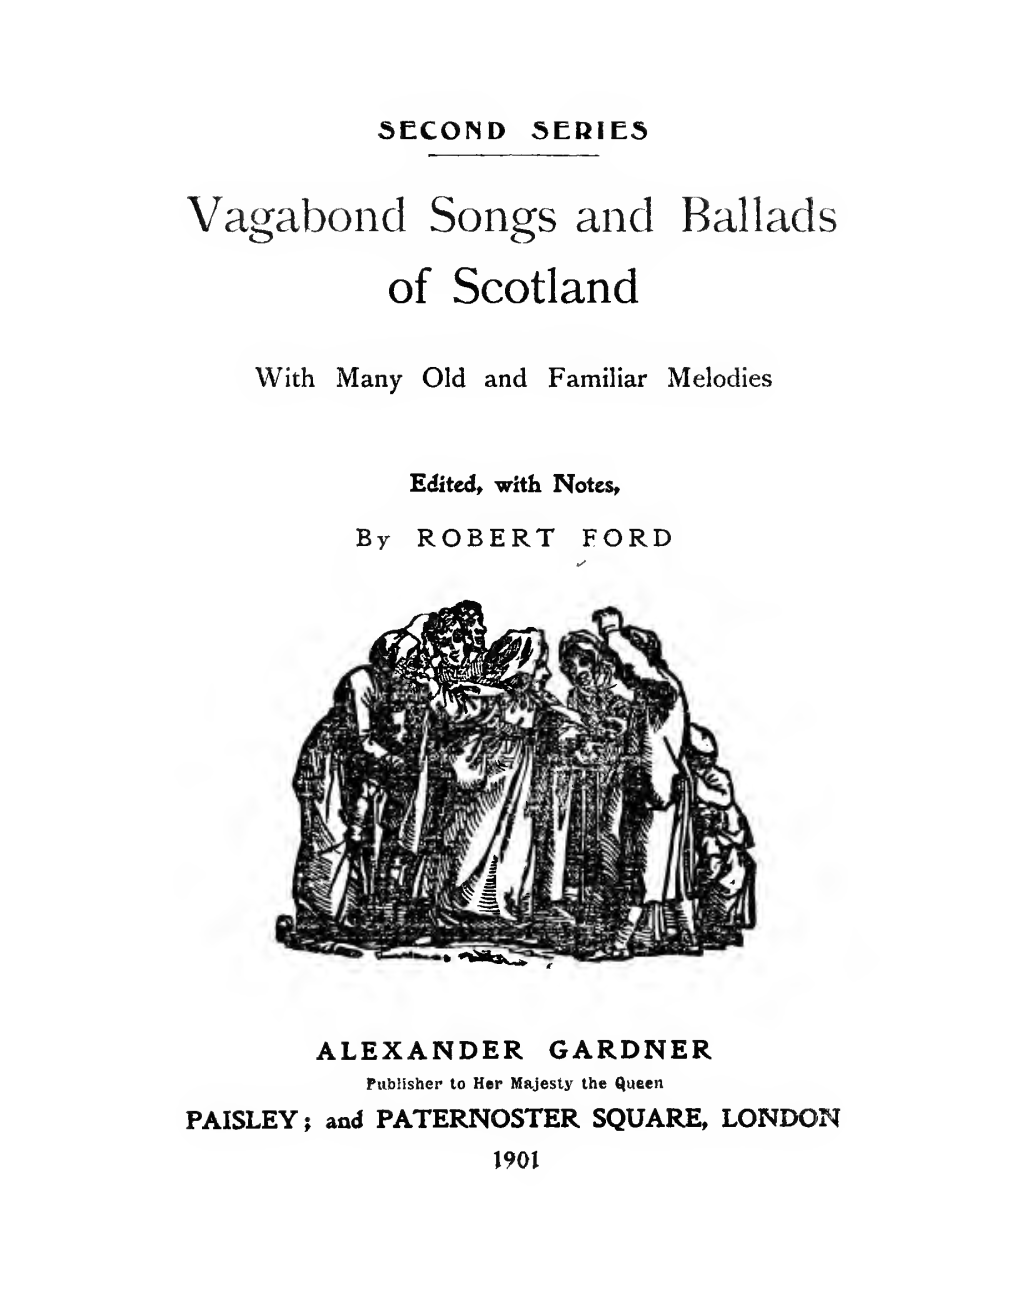 Vagabond Songs and Ballads of Scotland